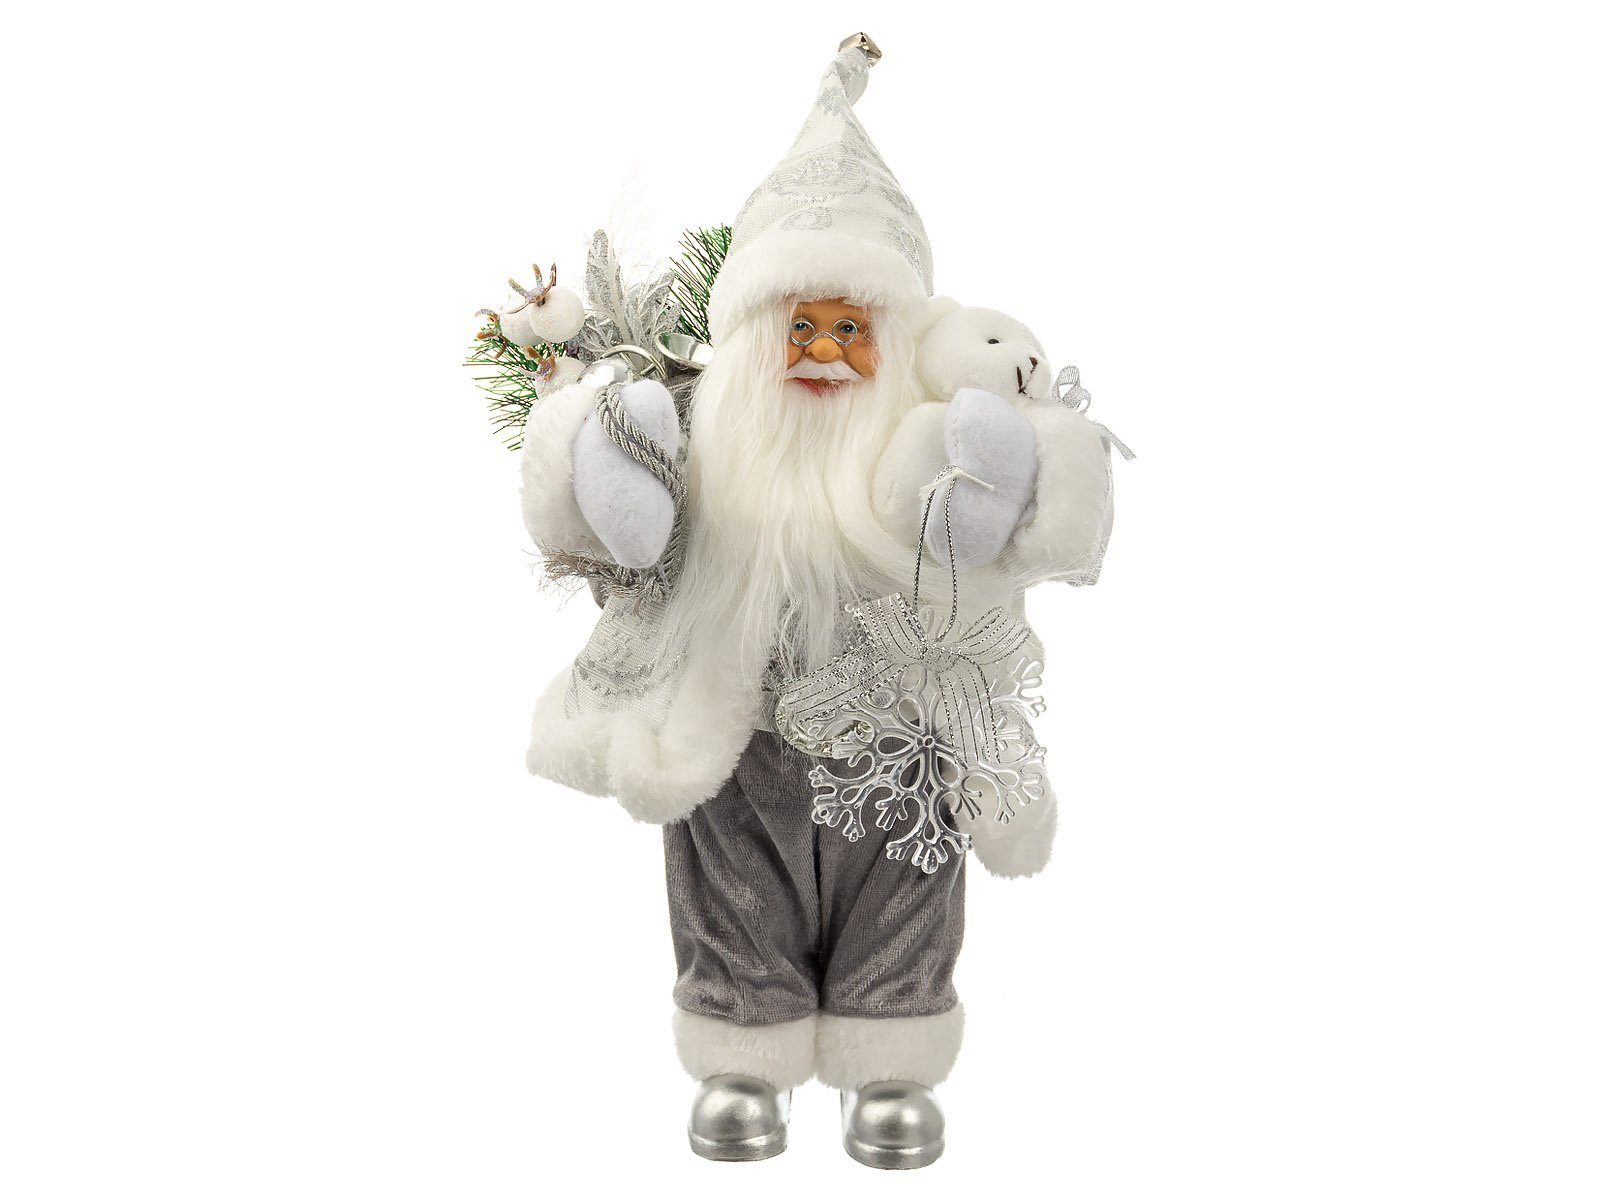 Santa Weihnachtsmann weiß / "OLAF" Paradise Weihnachtsmann Christmas Klaus 45575-30-weiss/grau (1 weiss/silber silber St),